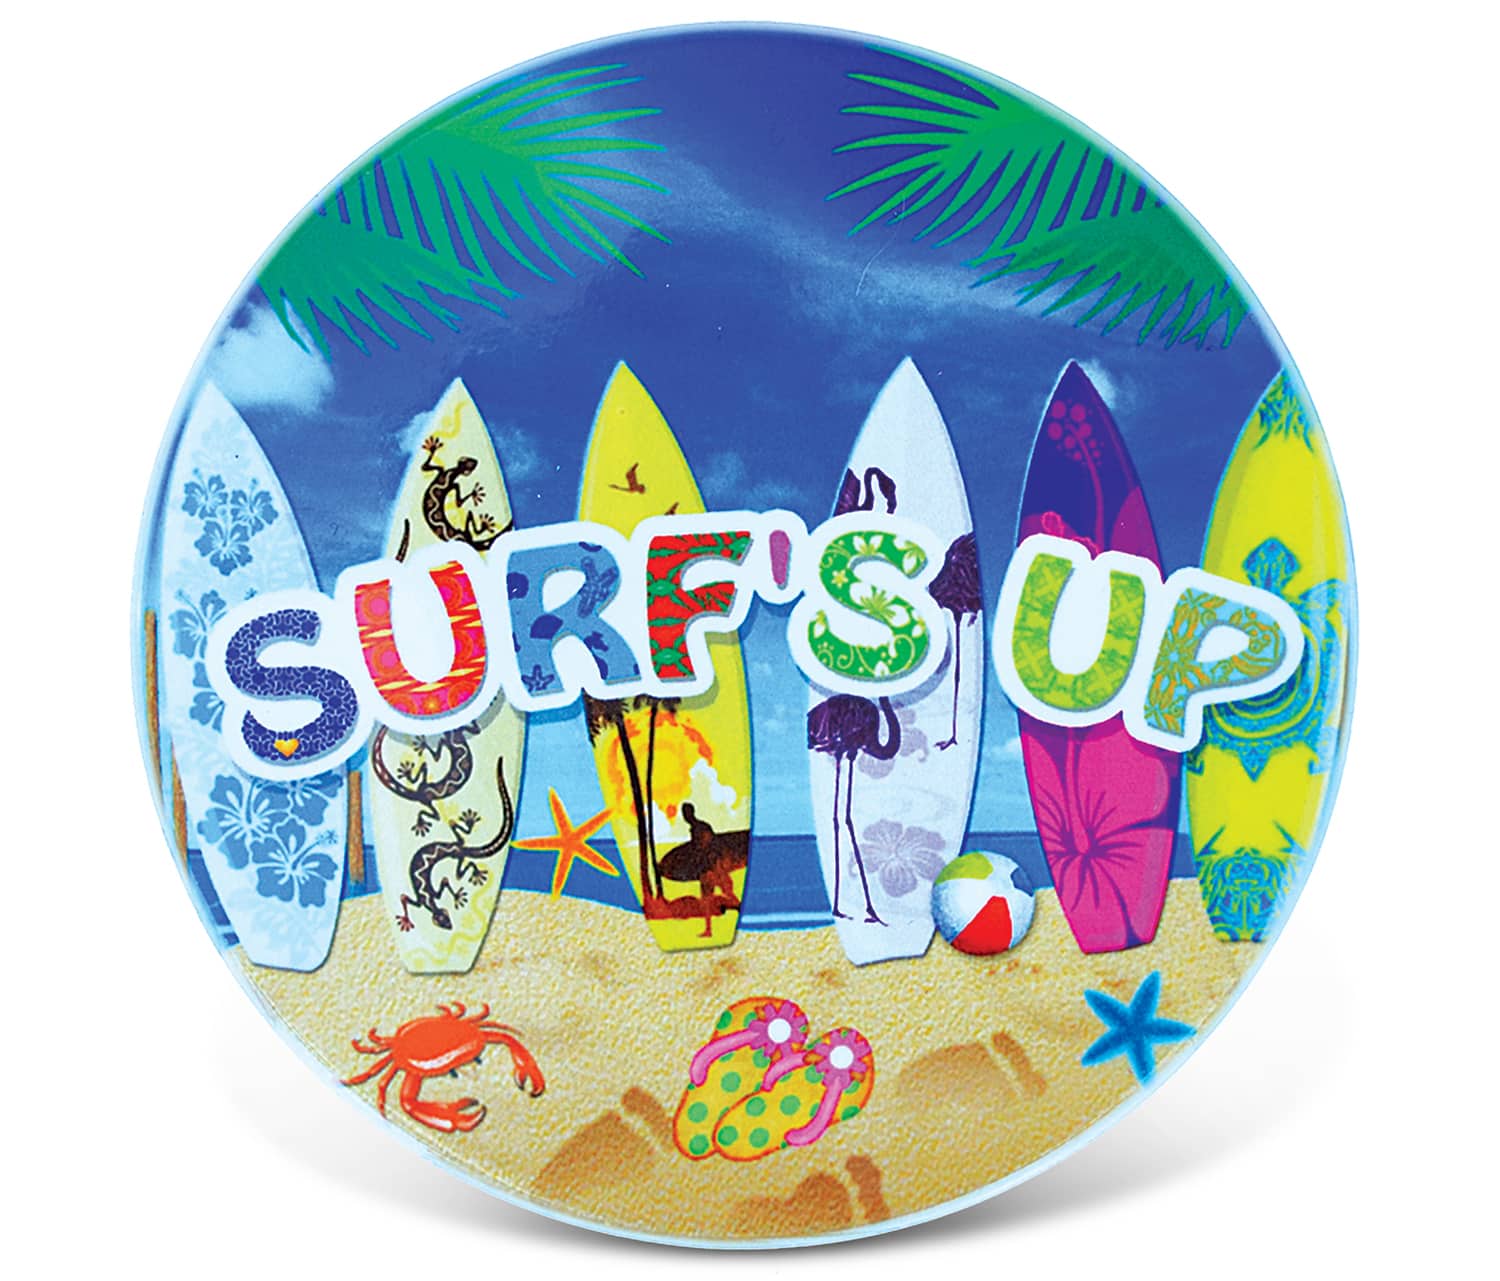 Surf’S Up – Ceramic Coaster